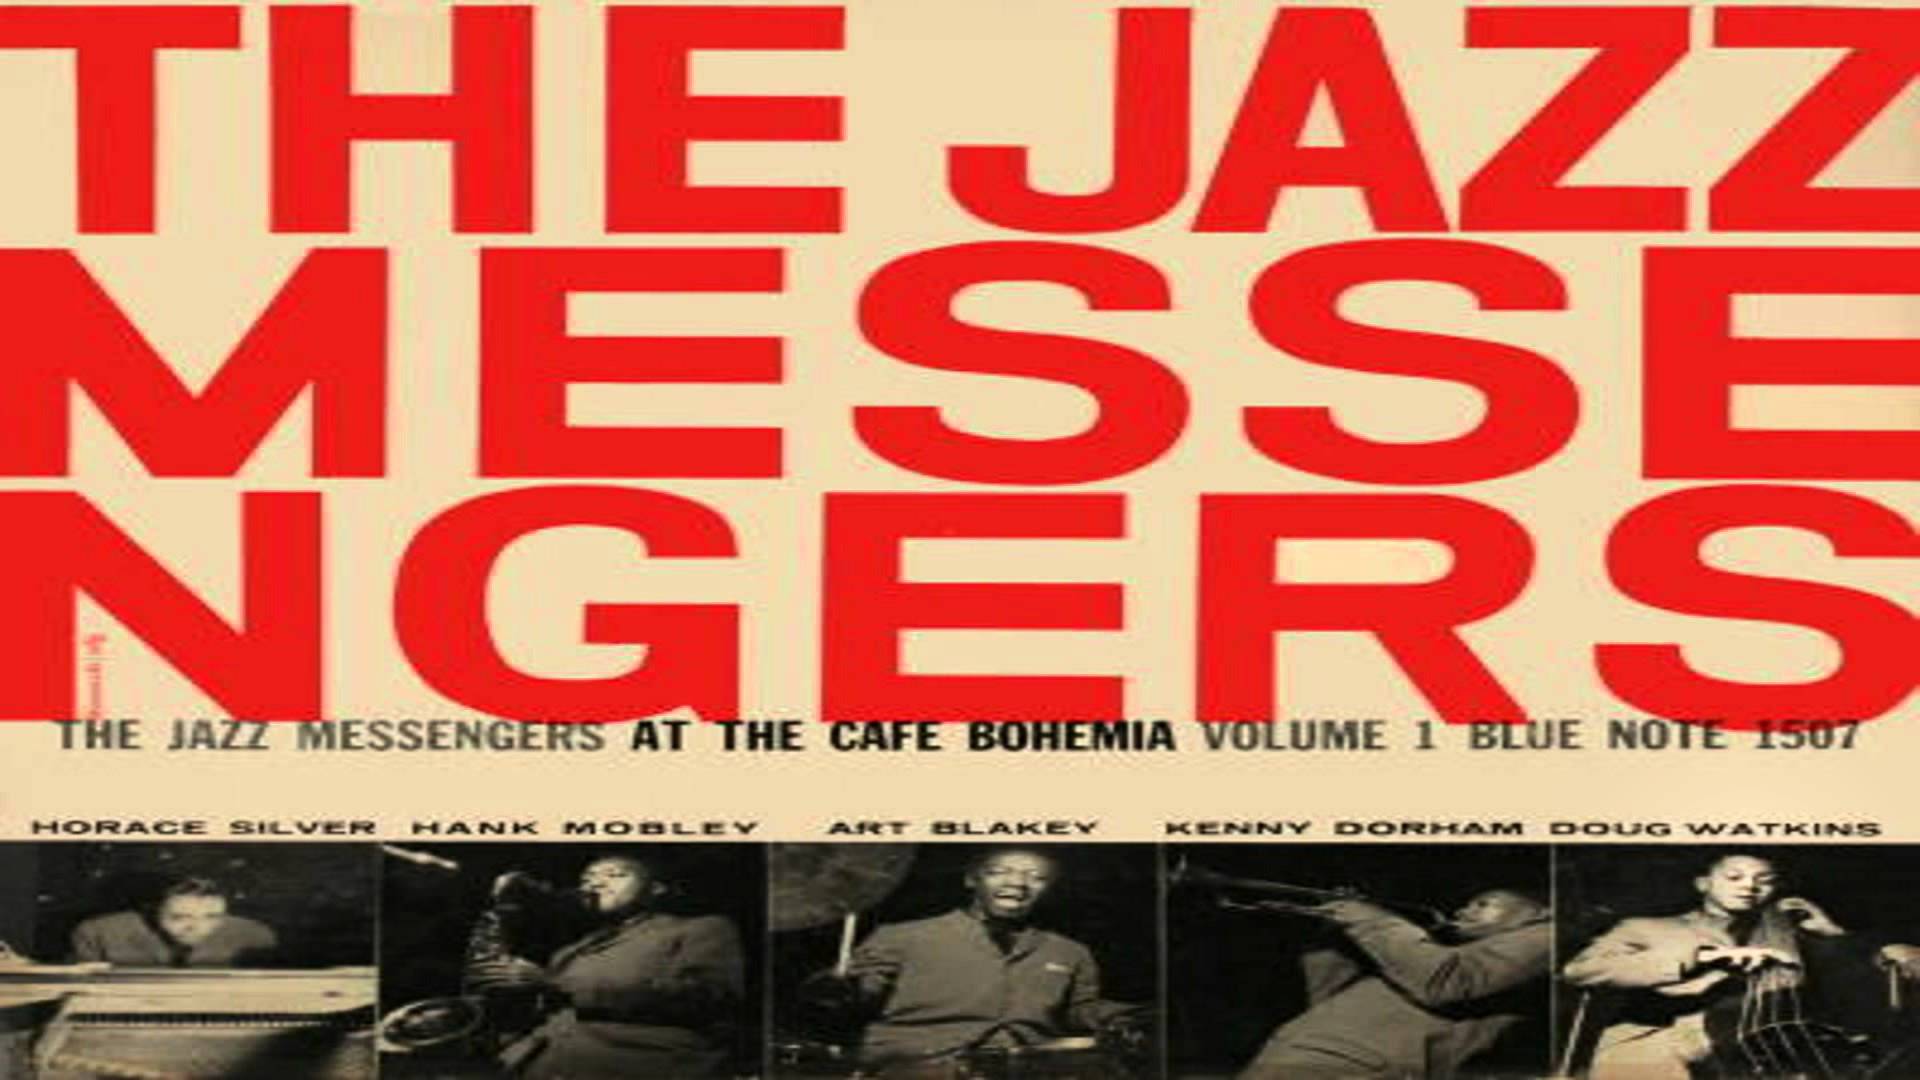 Art Blakey & The Jazz Messengers #5